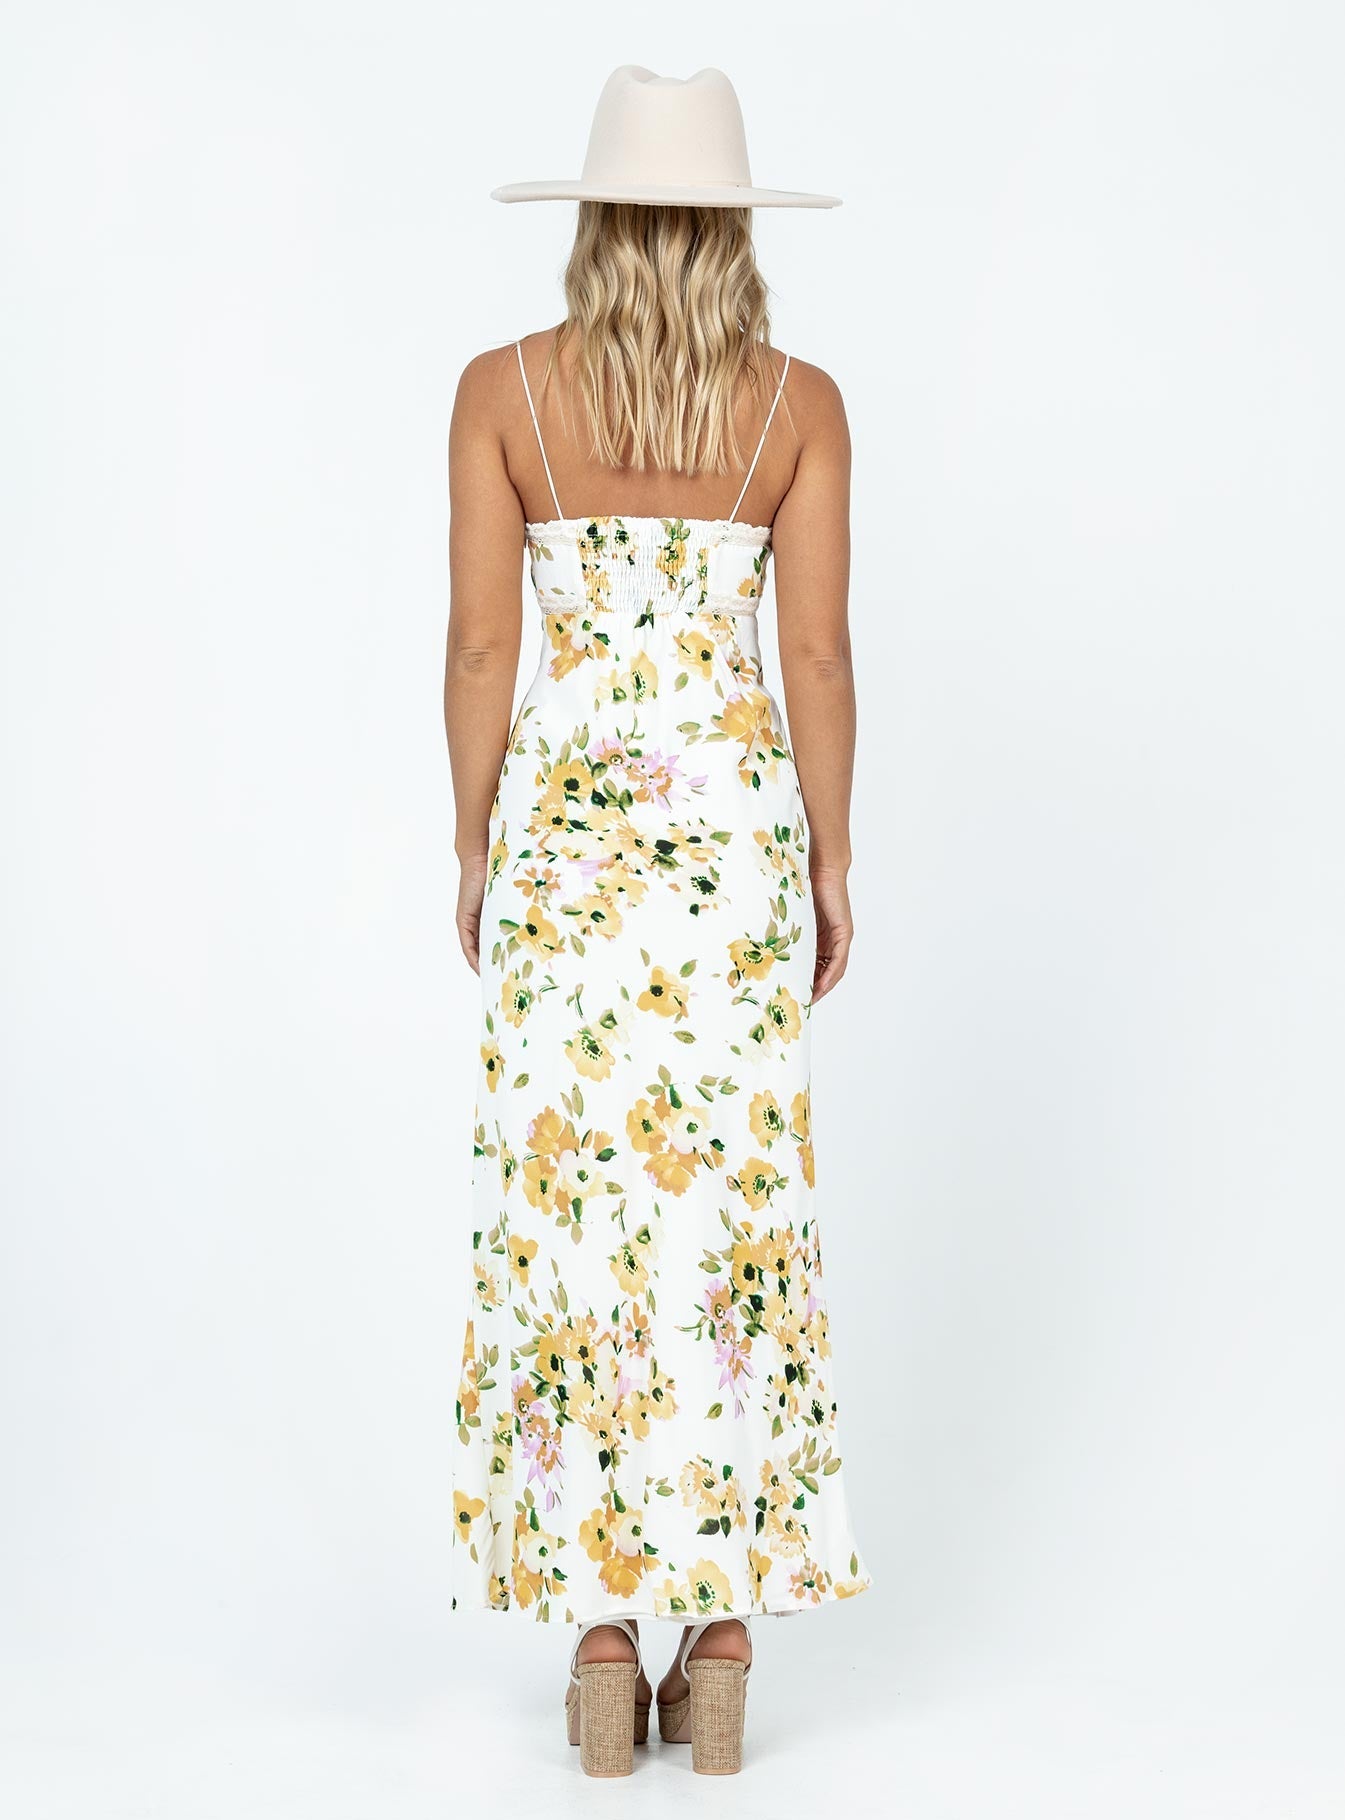 Shop Formal Dress - Emily Maxi Dress White / Yellow Floral third image